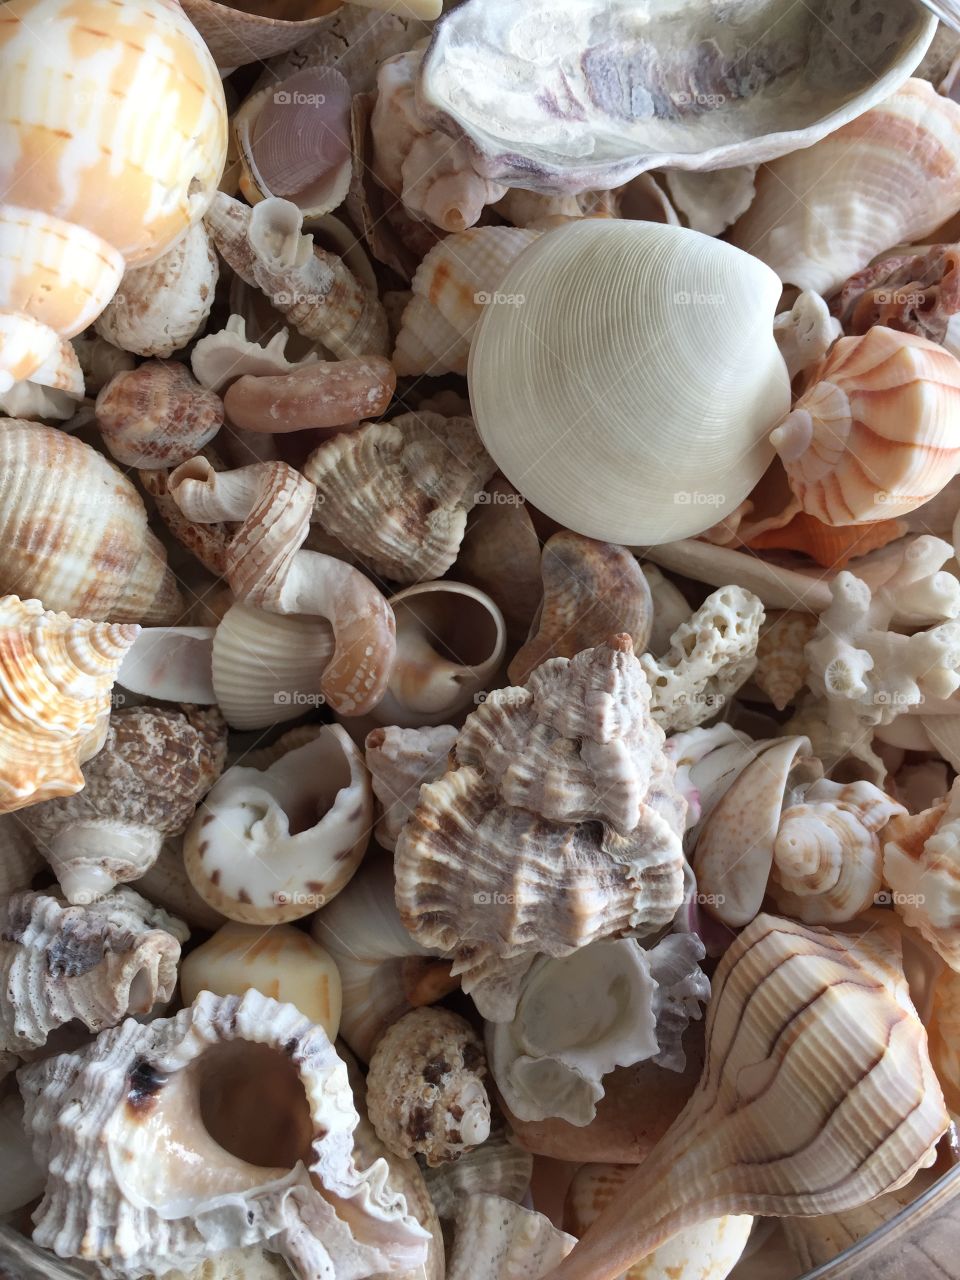 Sanibel Island sea shell collection